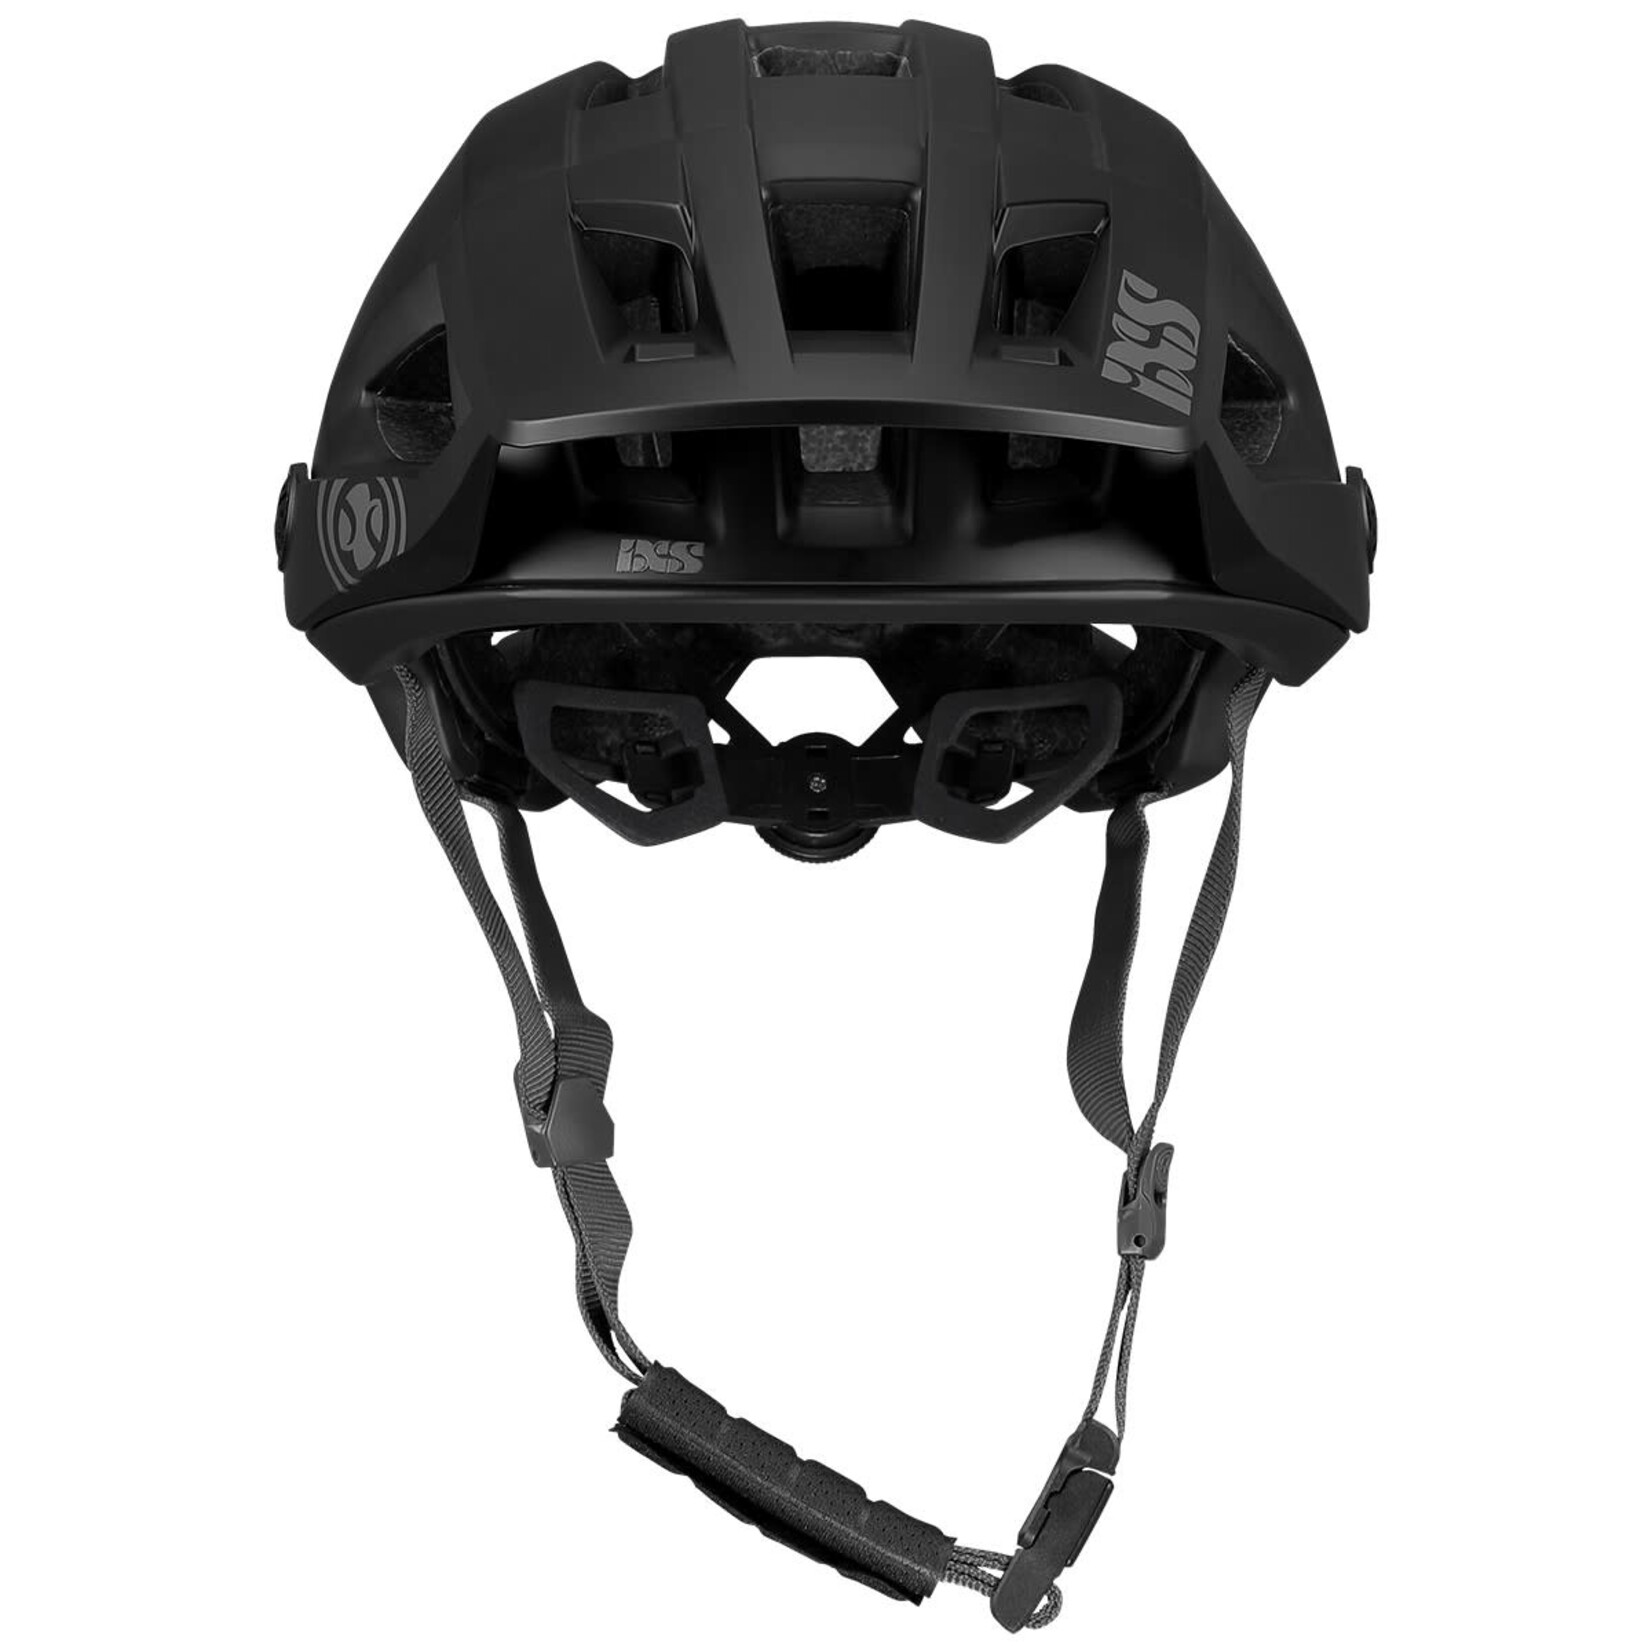 IXS IXS Trigger All Mountain MIPS Helmet